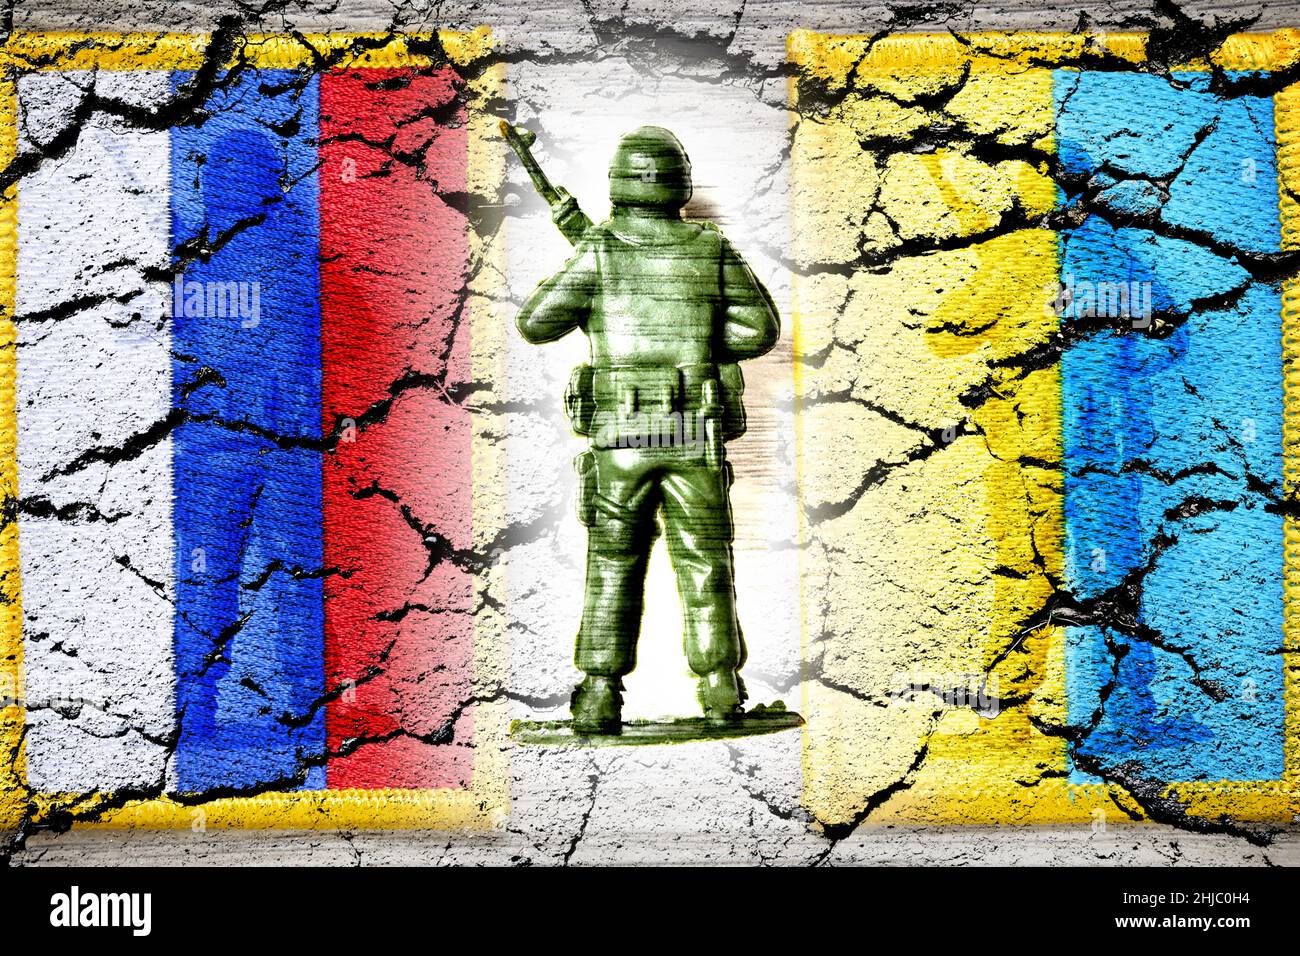 Soldier figure on flags of Russia and Ukraine, Ukraine crisis Stock Photo